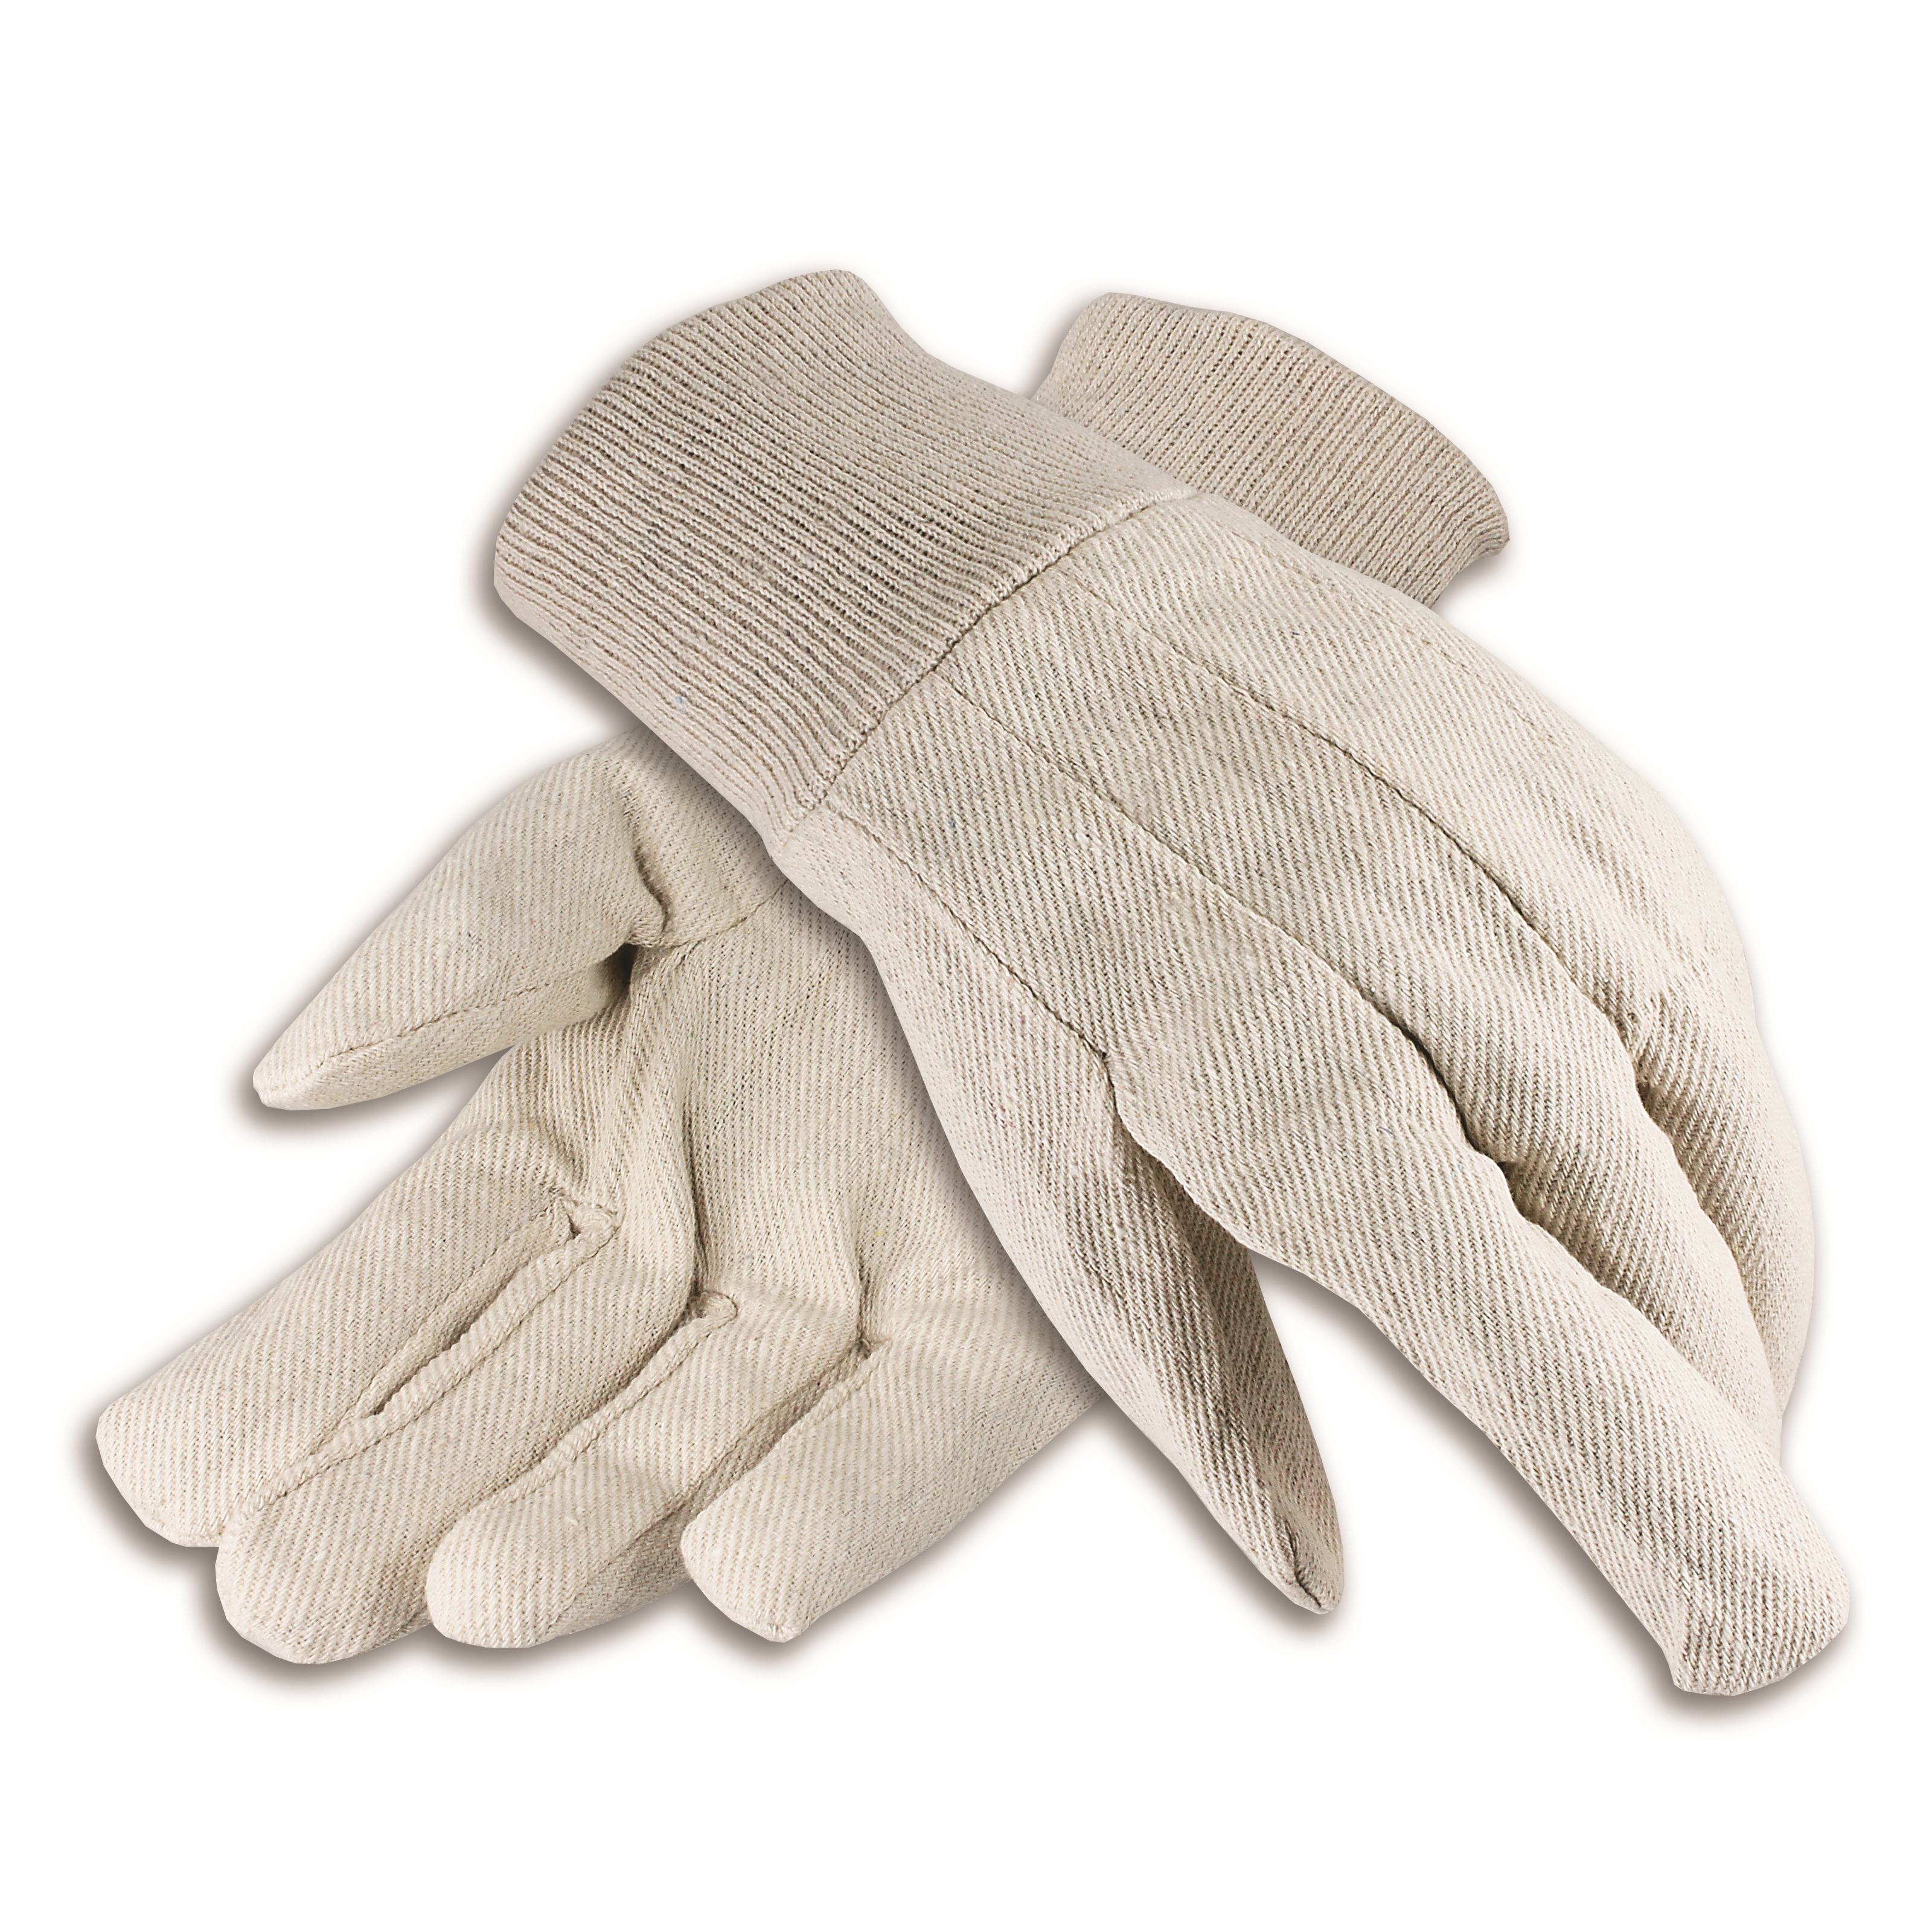 Cotton Canvas Gloves, Ladies' 8 oz. Knit Wrist